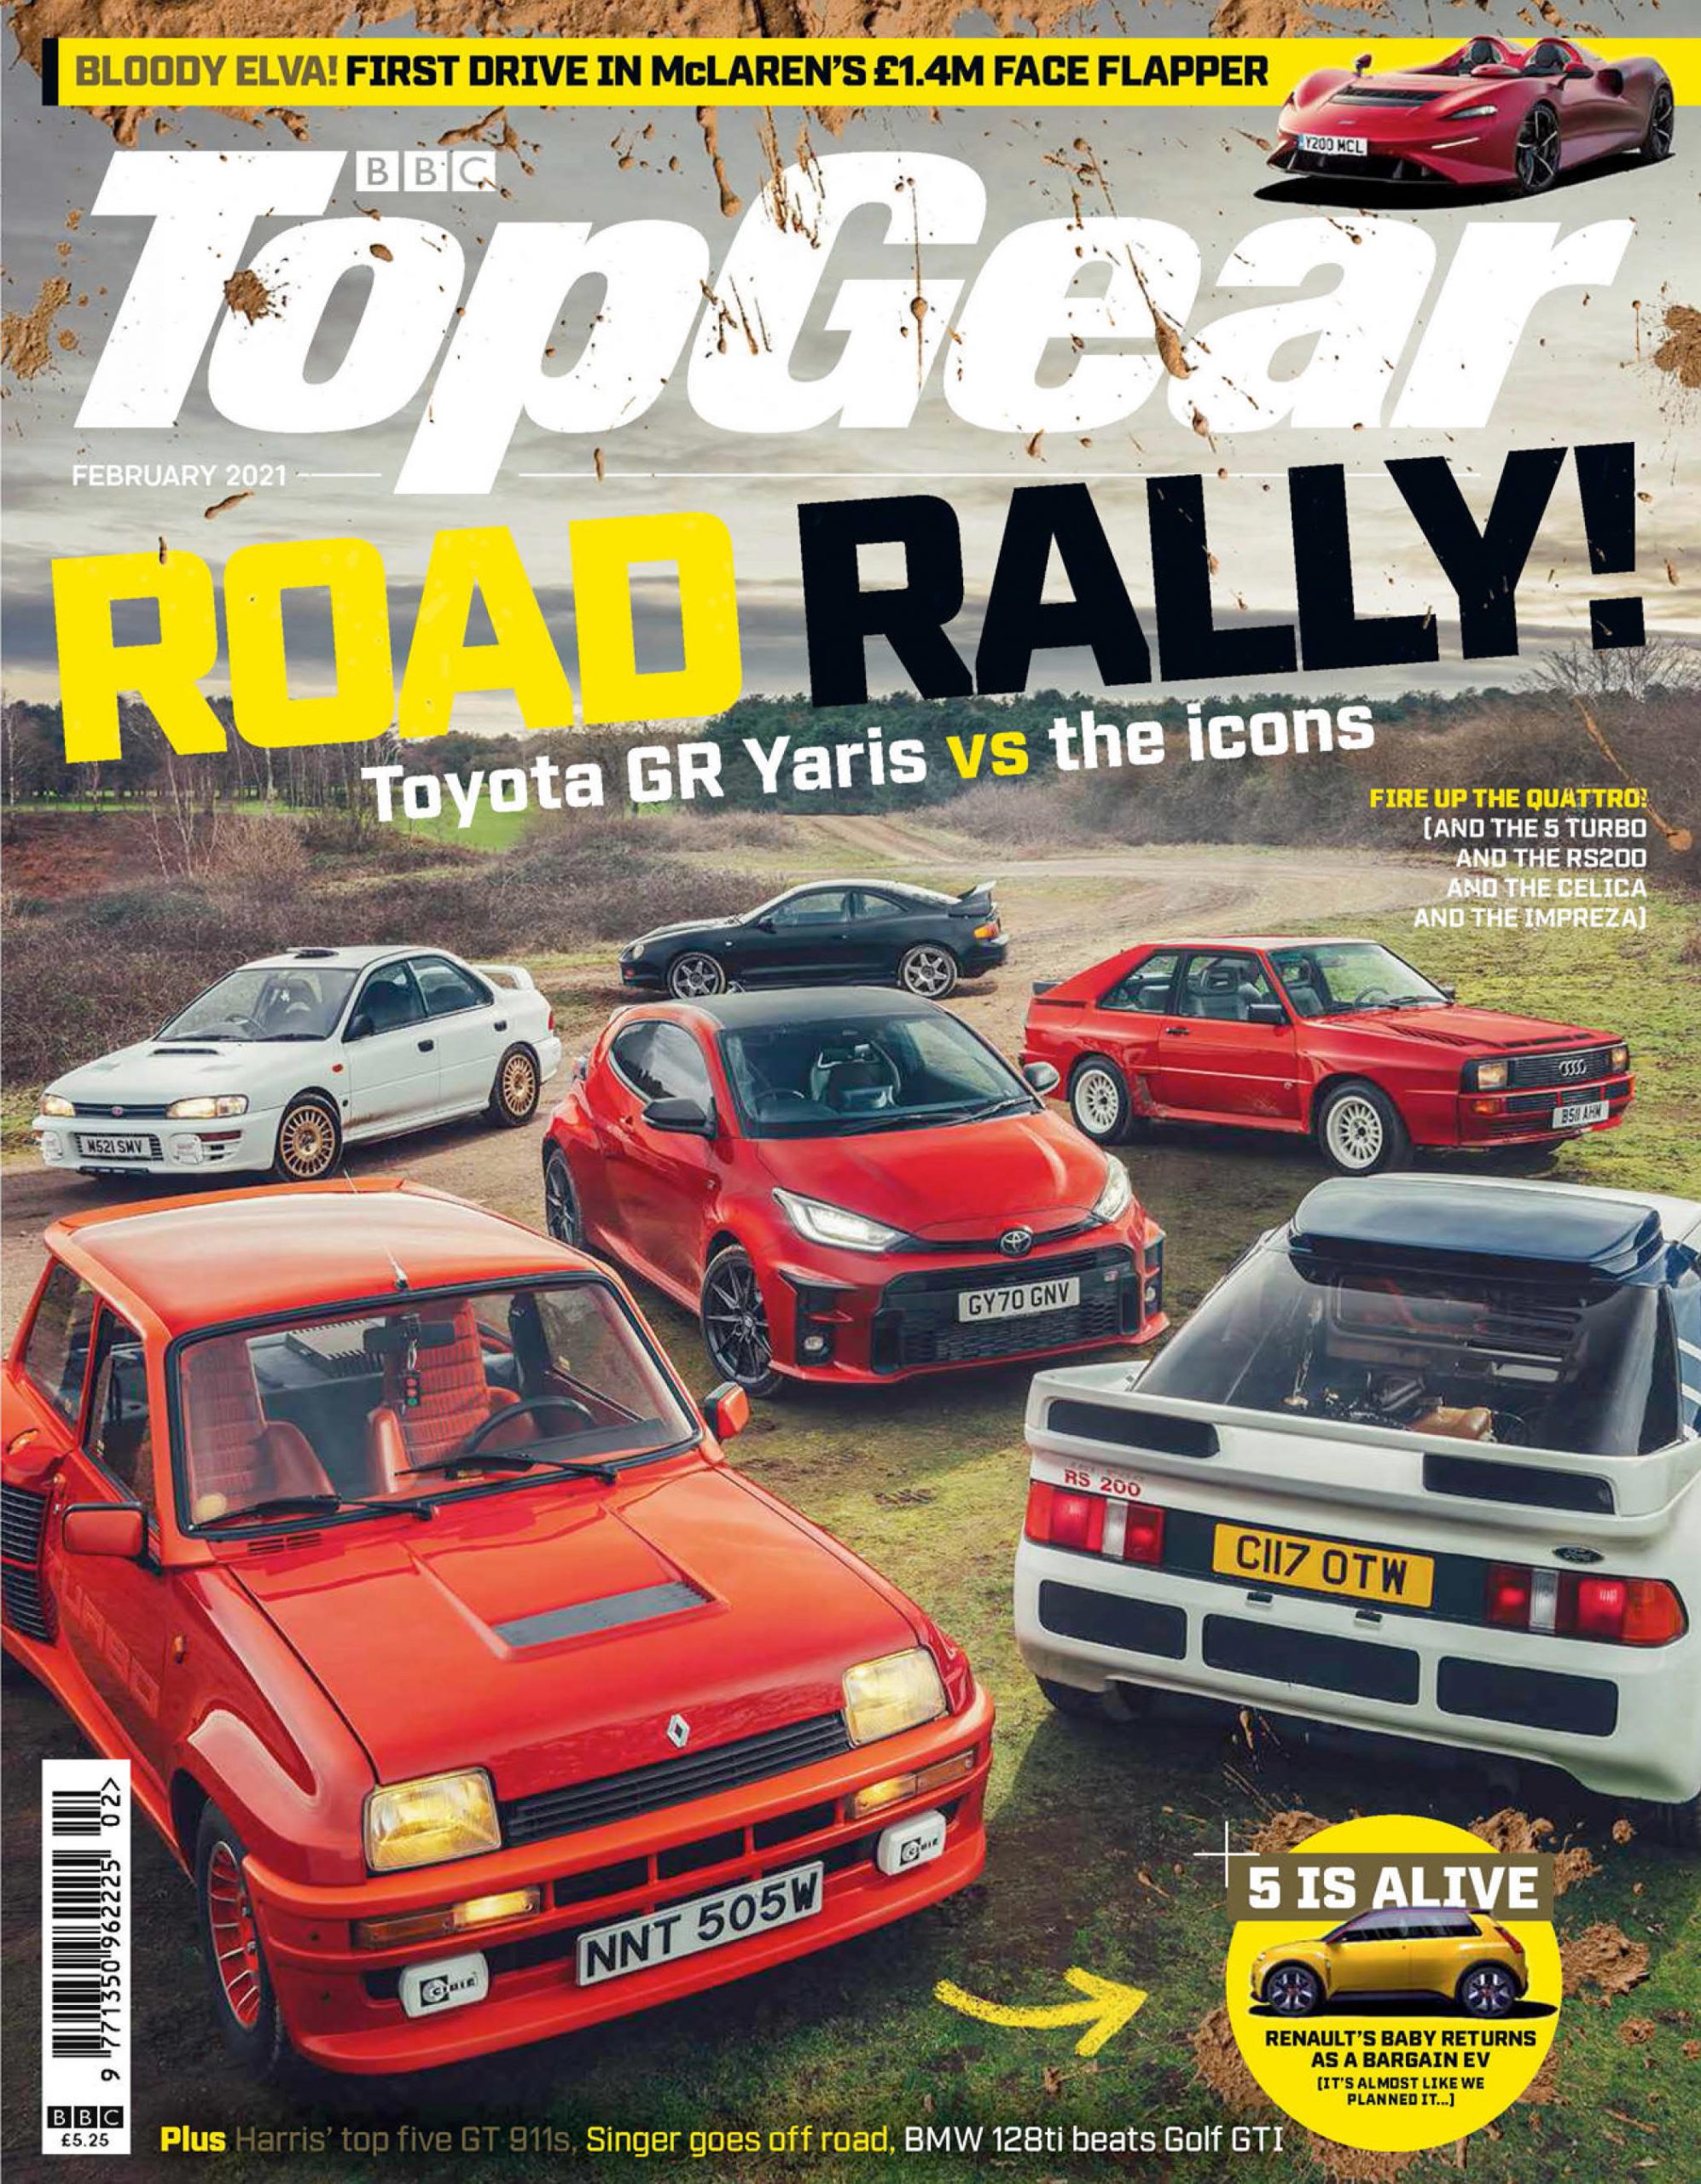 BBC Top Gear BBC疯狂汽车秀杂志  FEBRUARY 2021年2月刊 内容